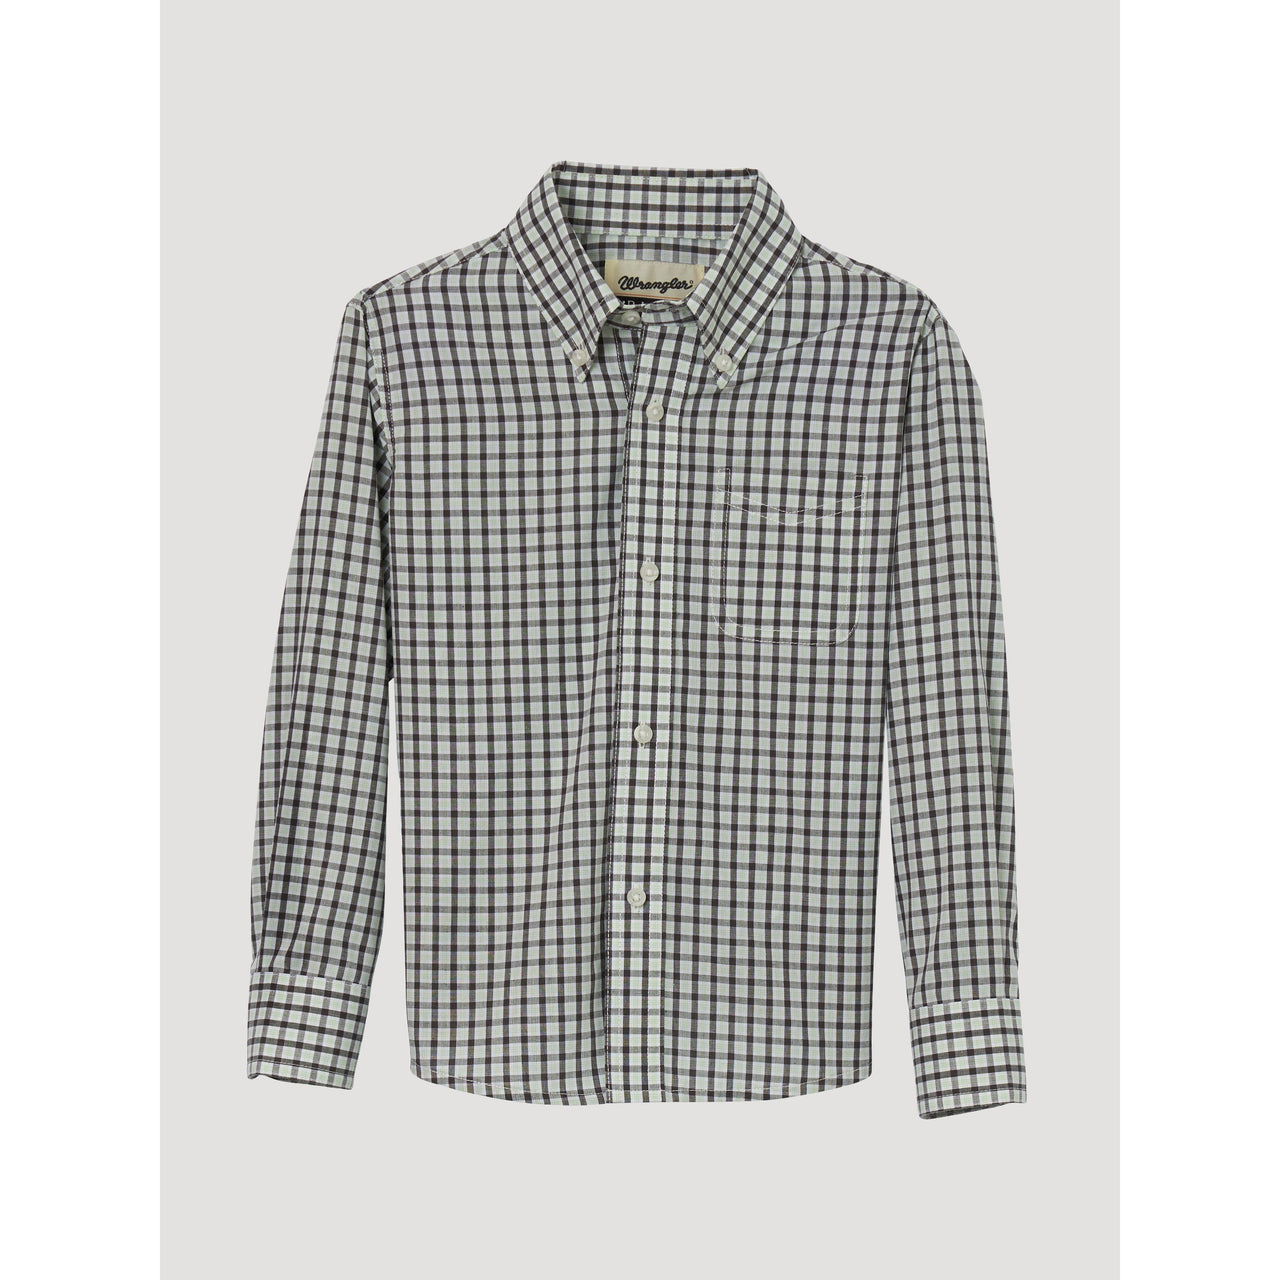 Wrangler Boy's Riata Long Sleeve Plaid Button Down Shirt - ASSORTED